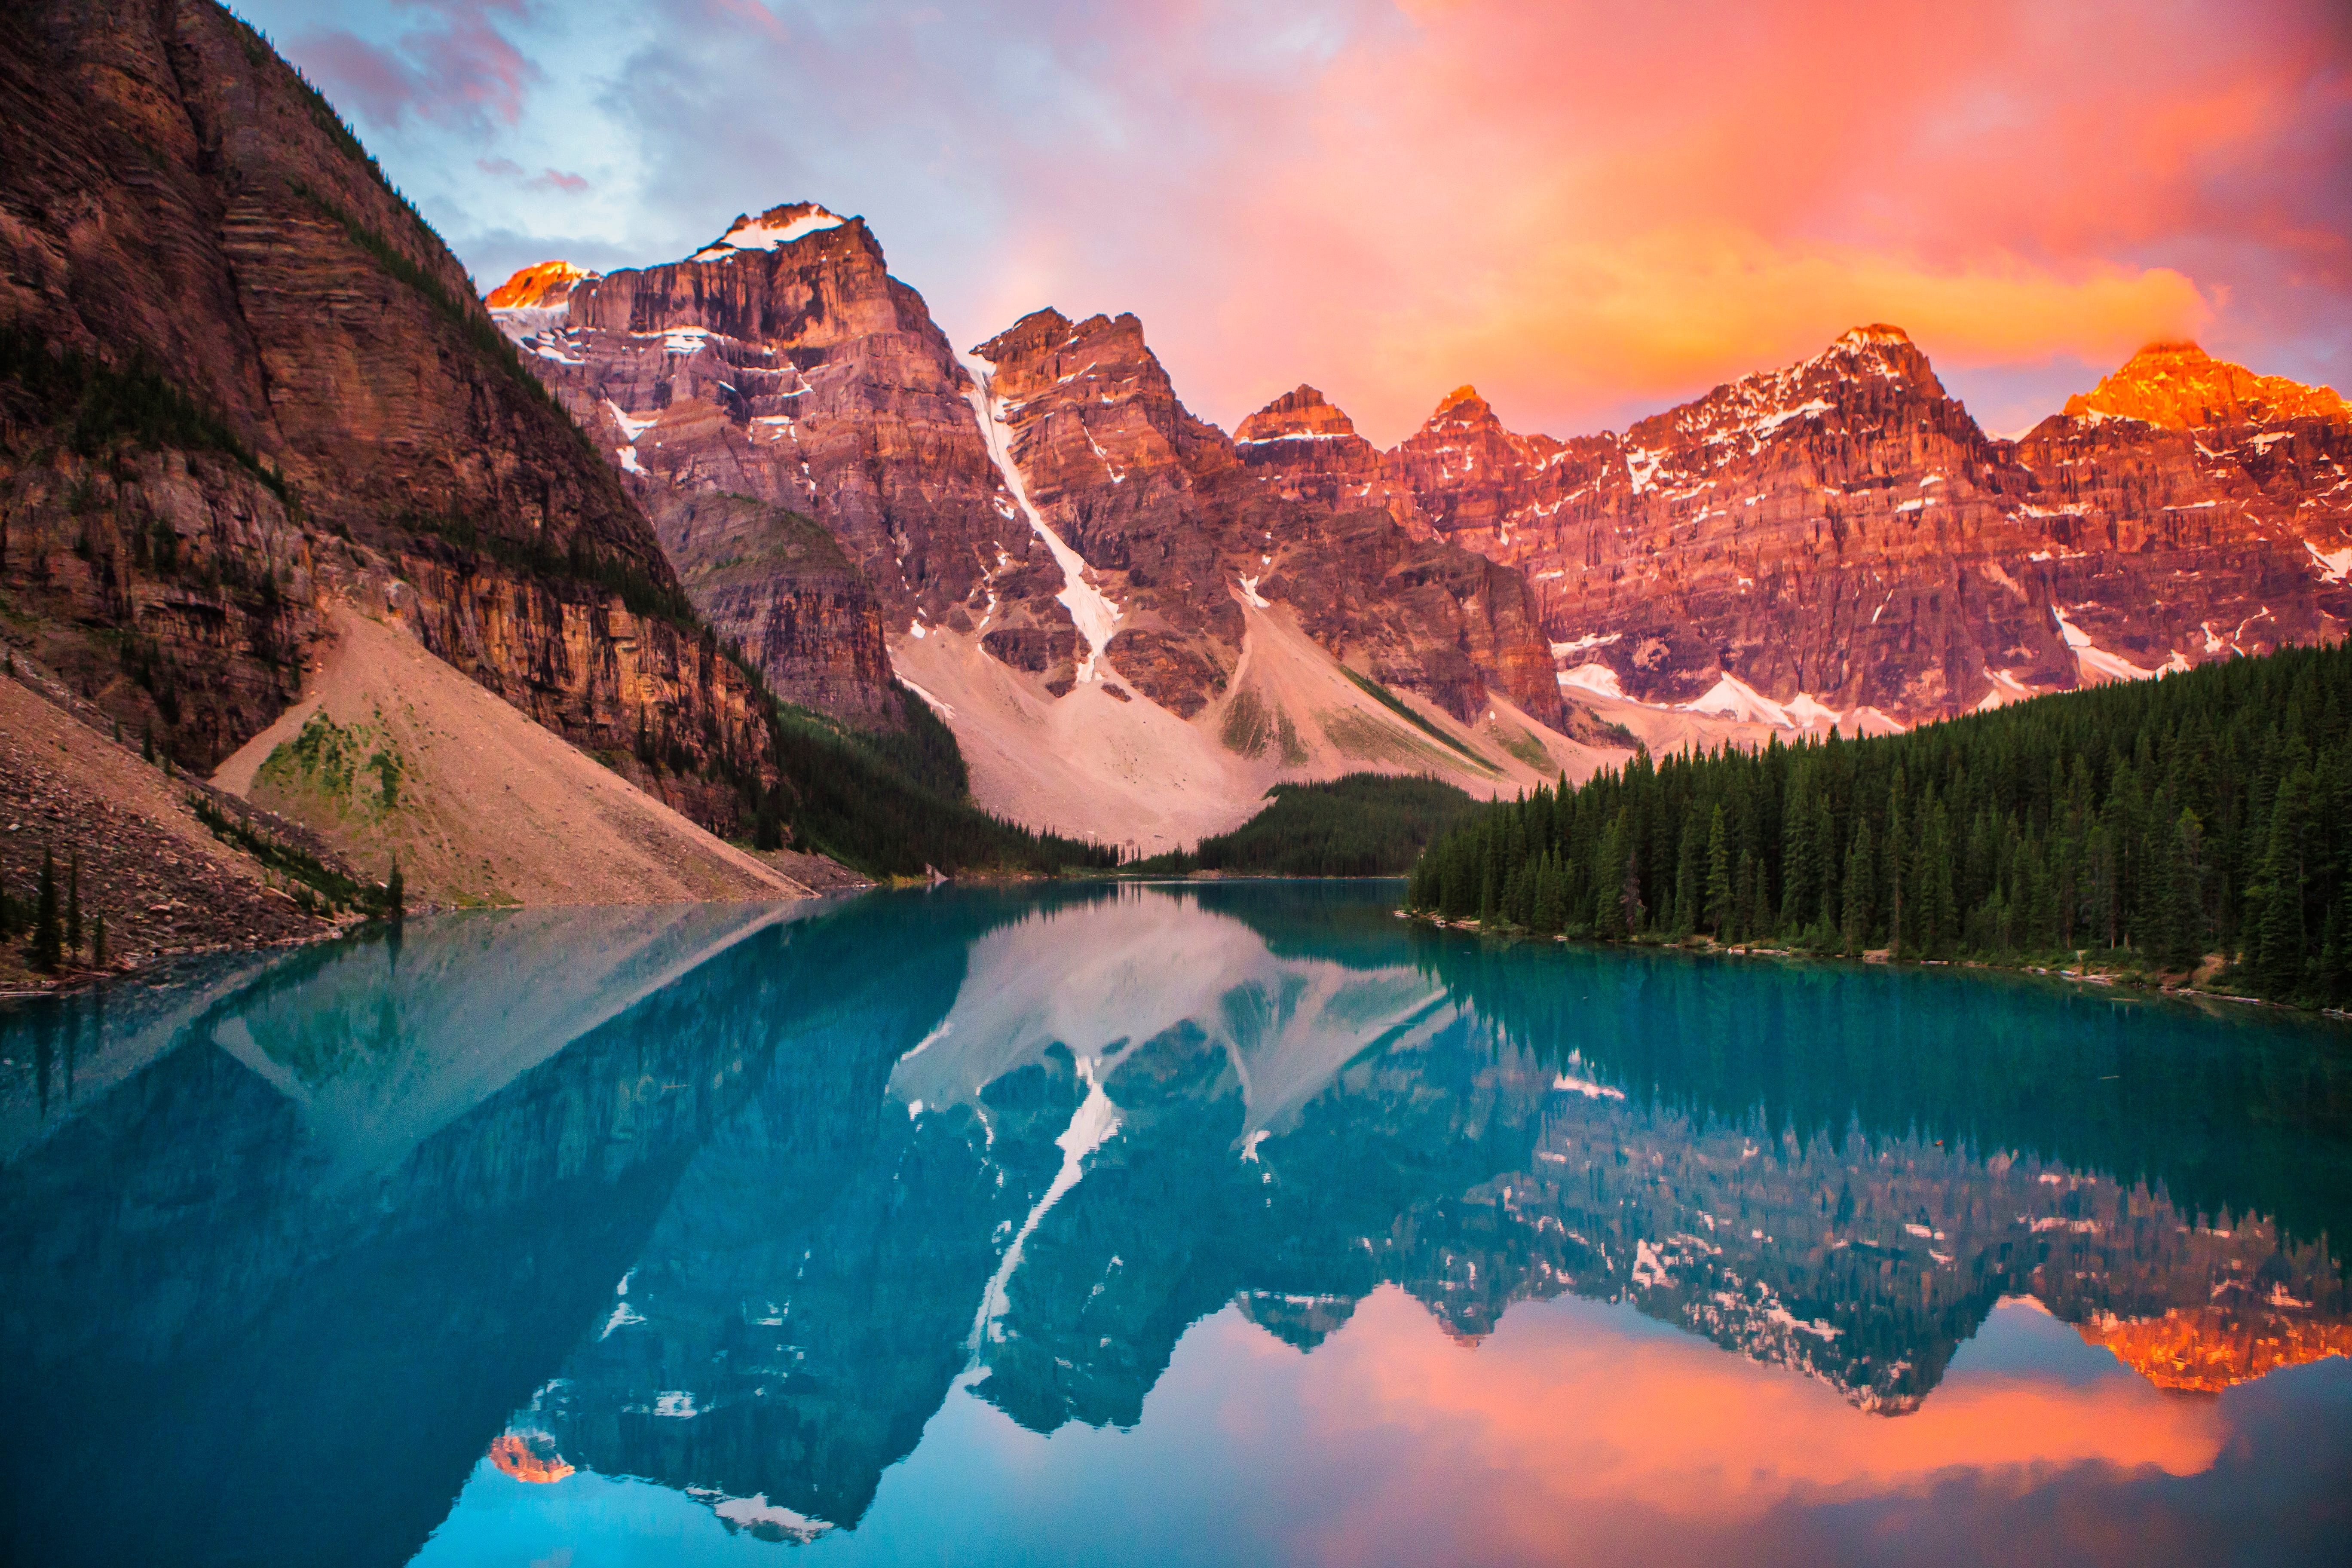 HD wallpaper, Banff National Park, Landscape, Scenery, Canada, Sunset, Rocky Mountains, Reflection, Evening Sky, Alberta, 5K, Moraine Lake